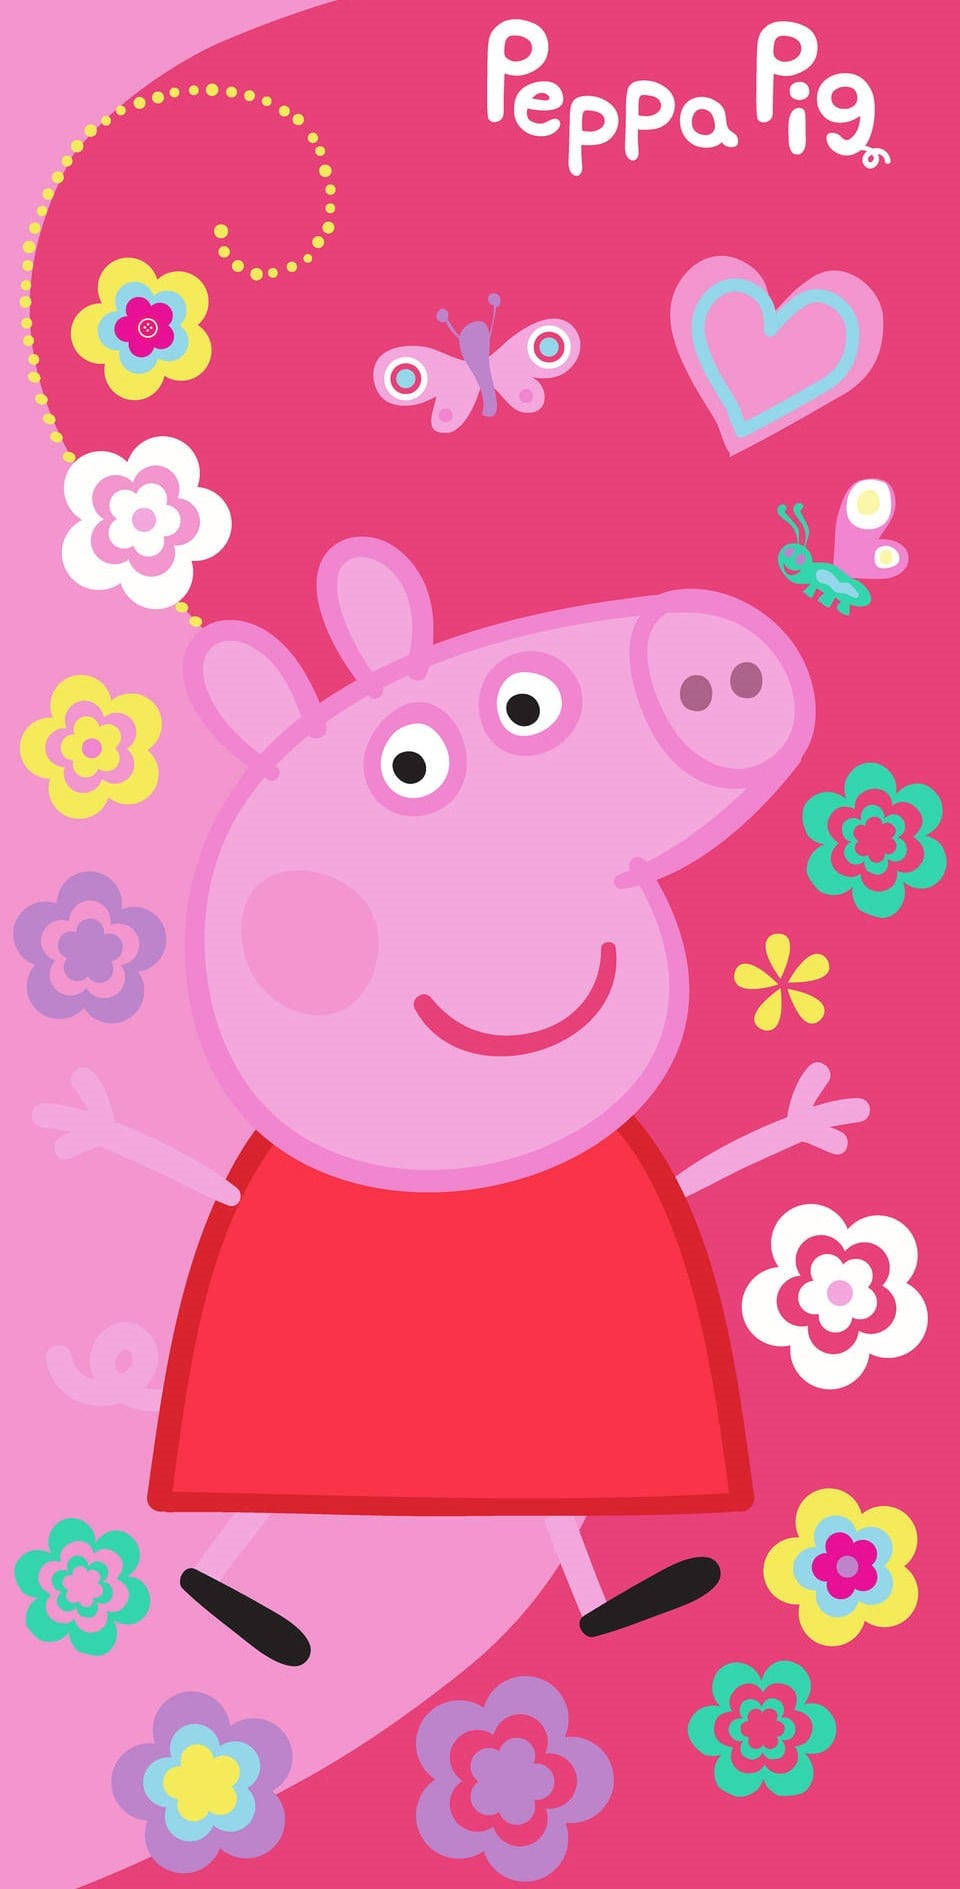 Peppa Pig Inspired Iphone Theme